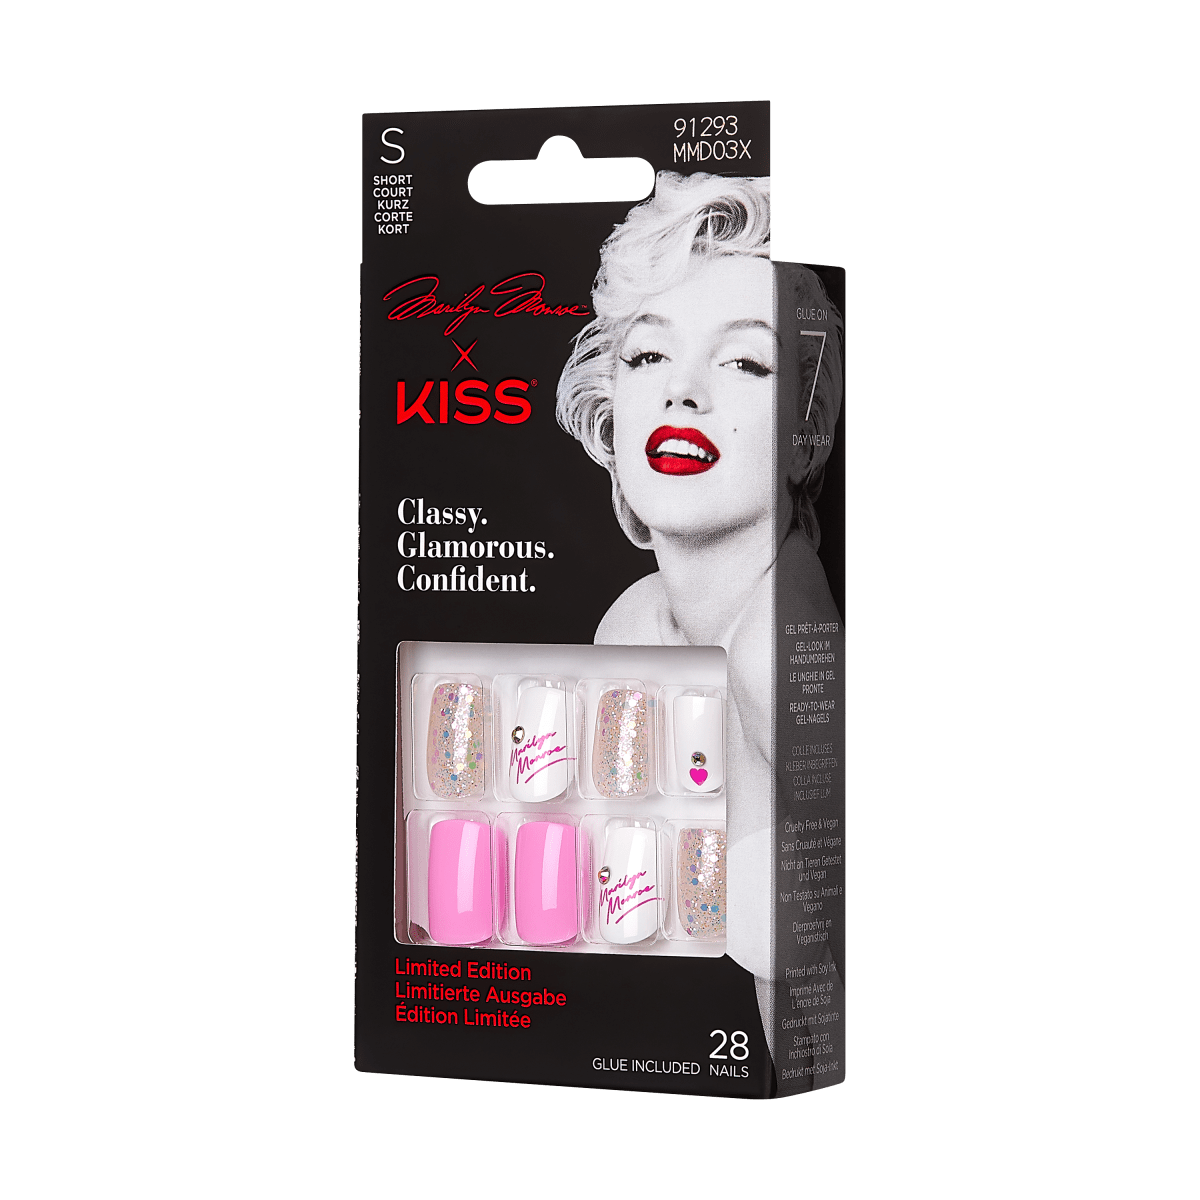 Marilyn Monroe x KISS Limited Edition Nails - Pin-up Pink